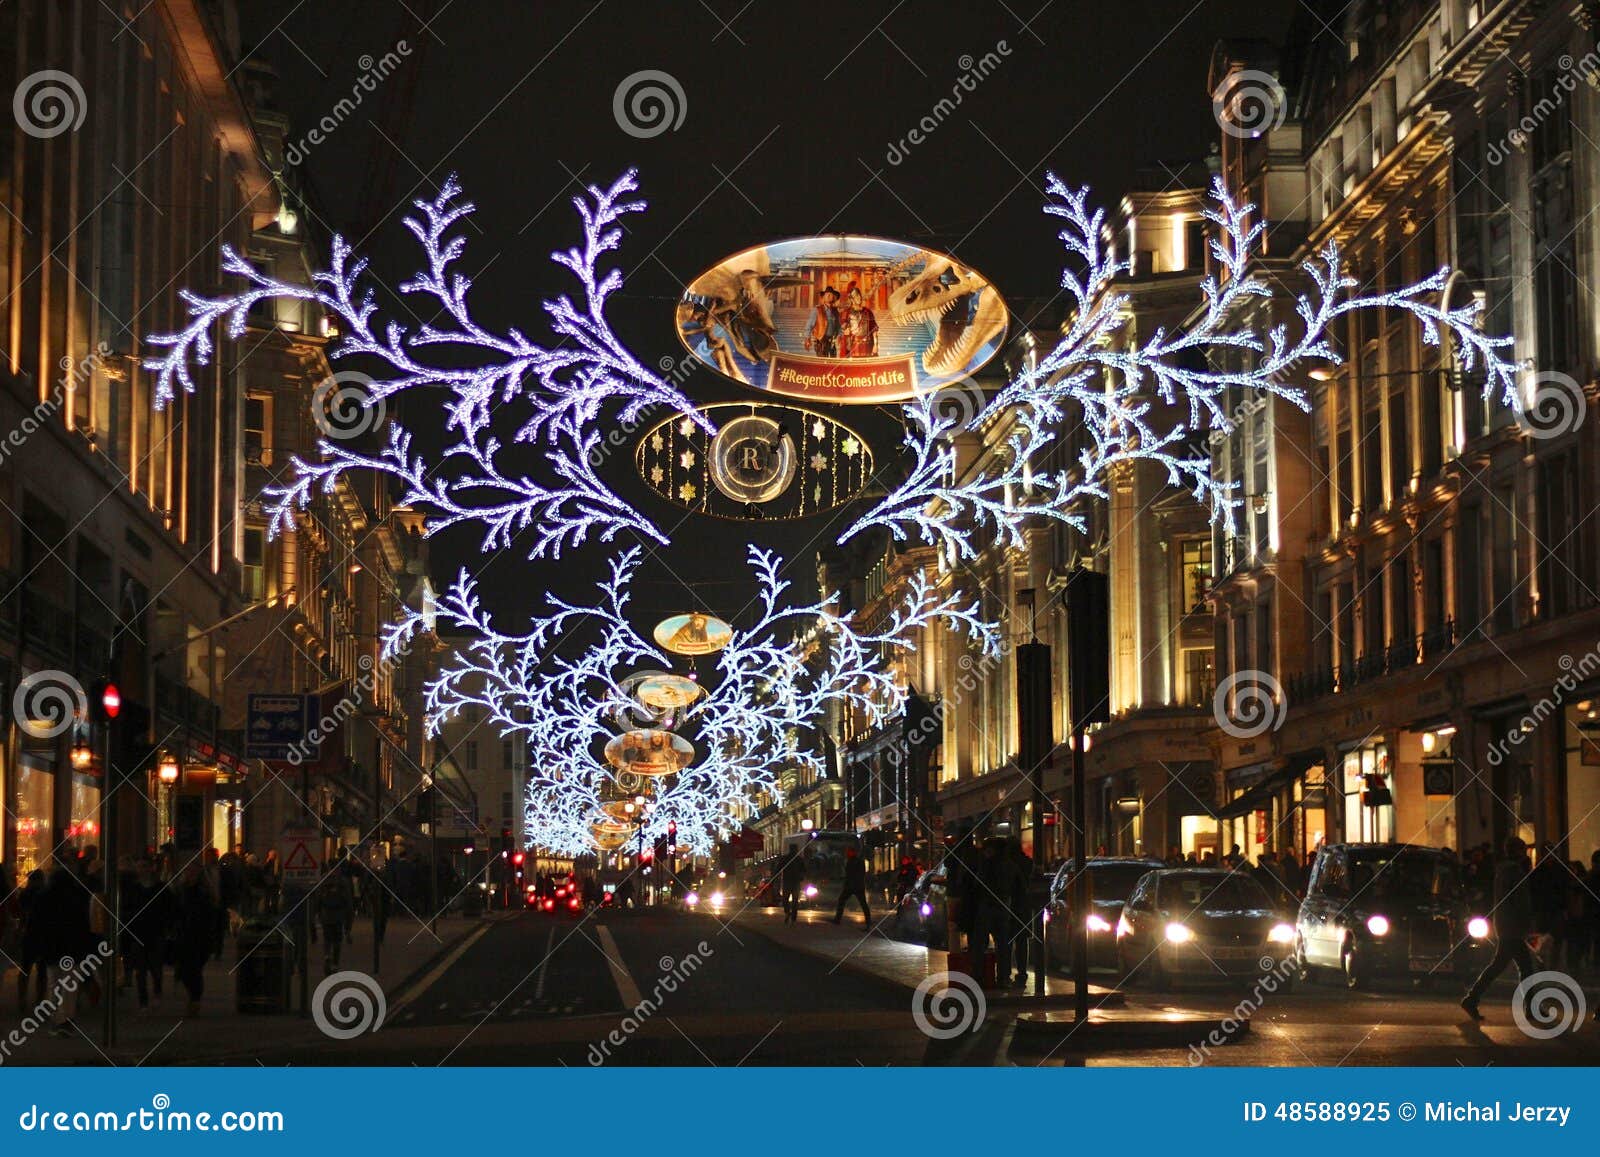 London Christmas Shopping Editorial Image Image 48588925